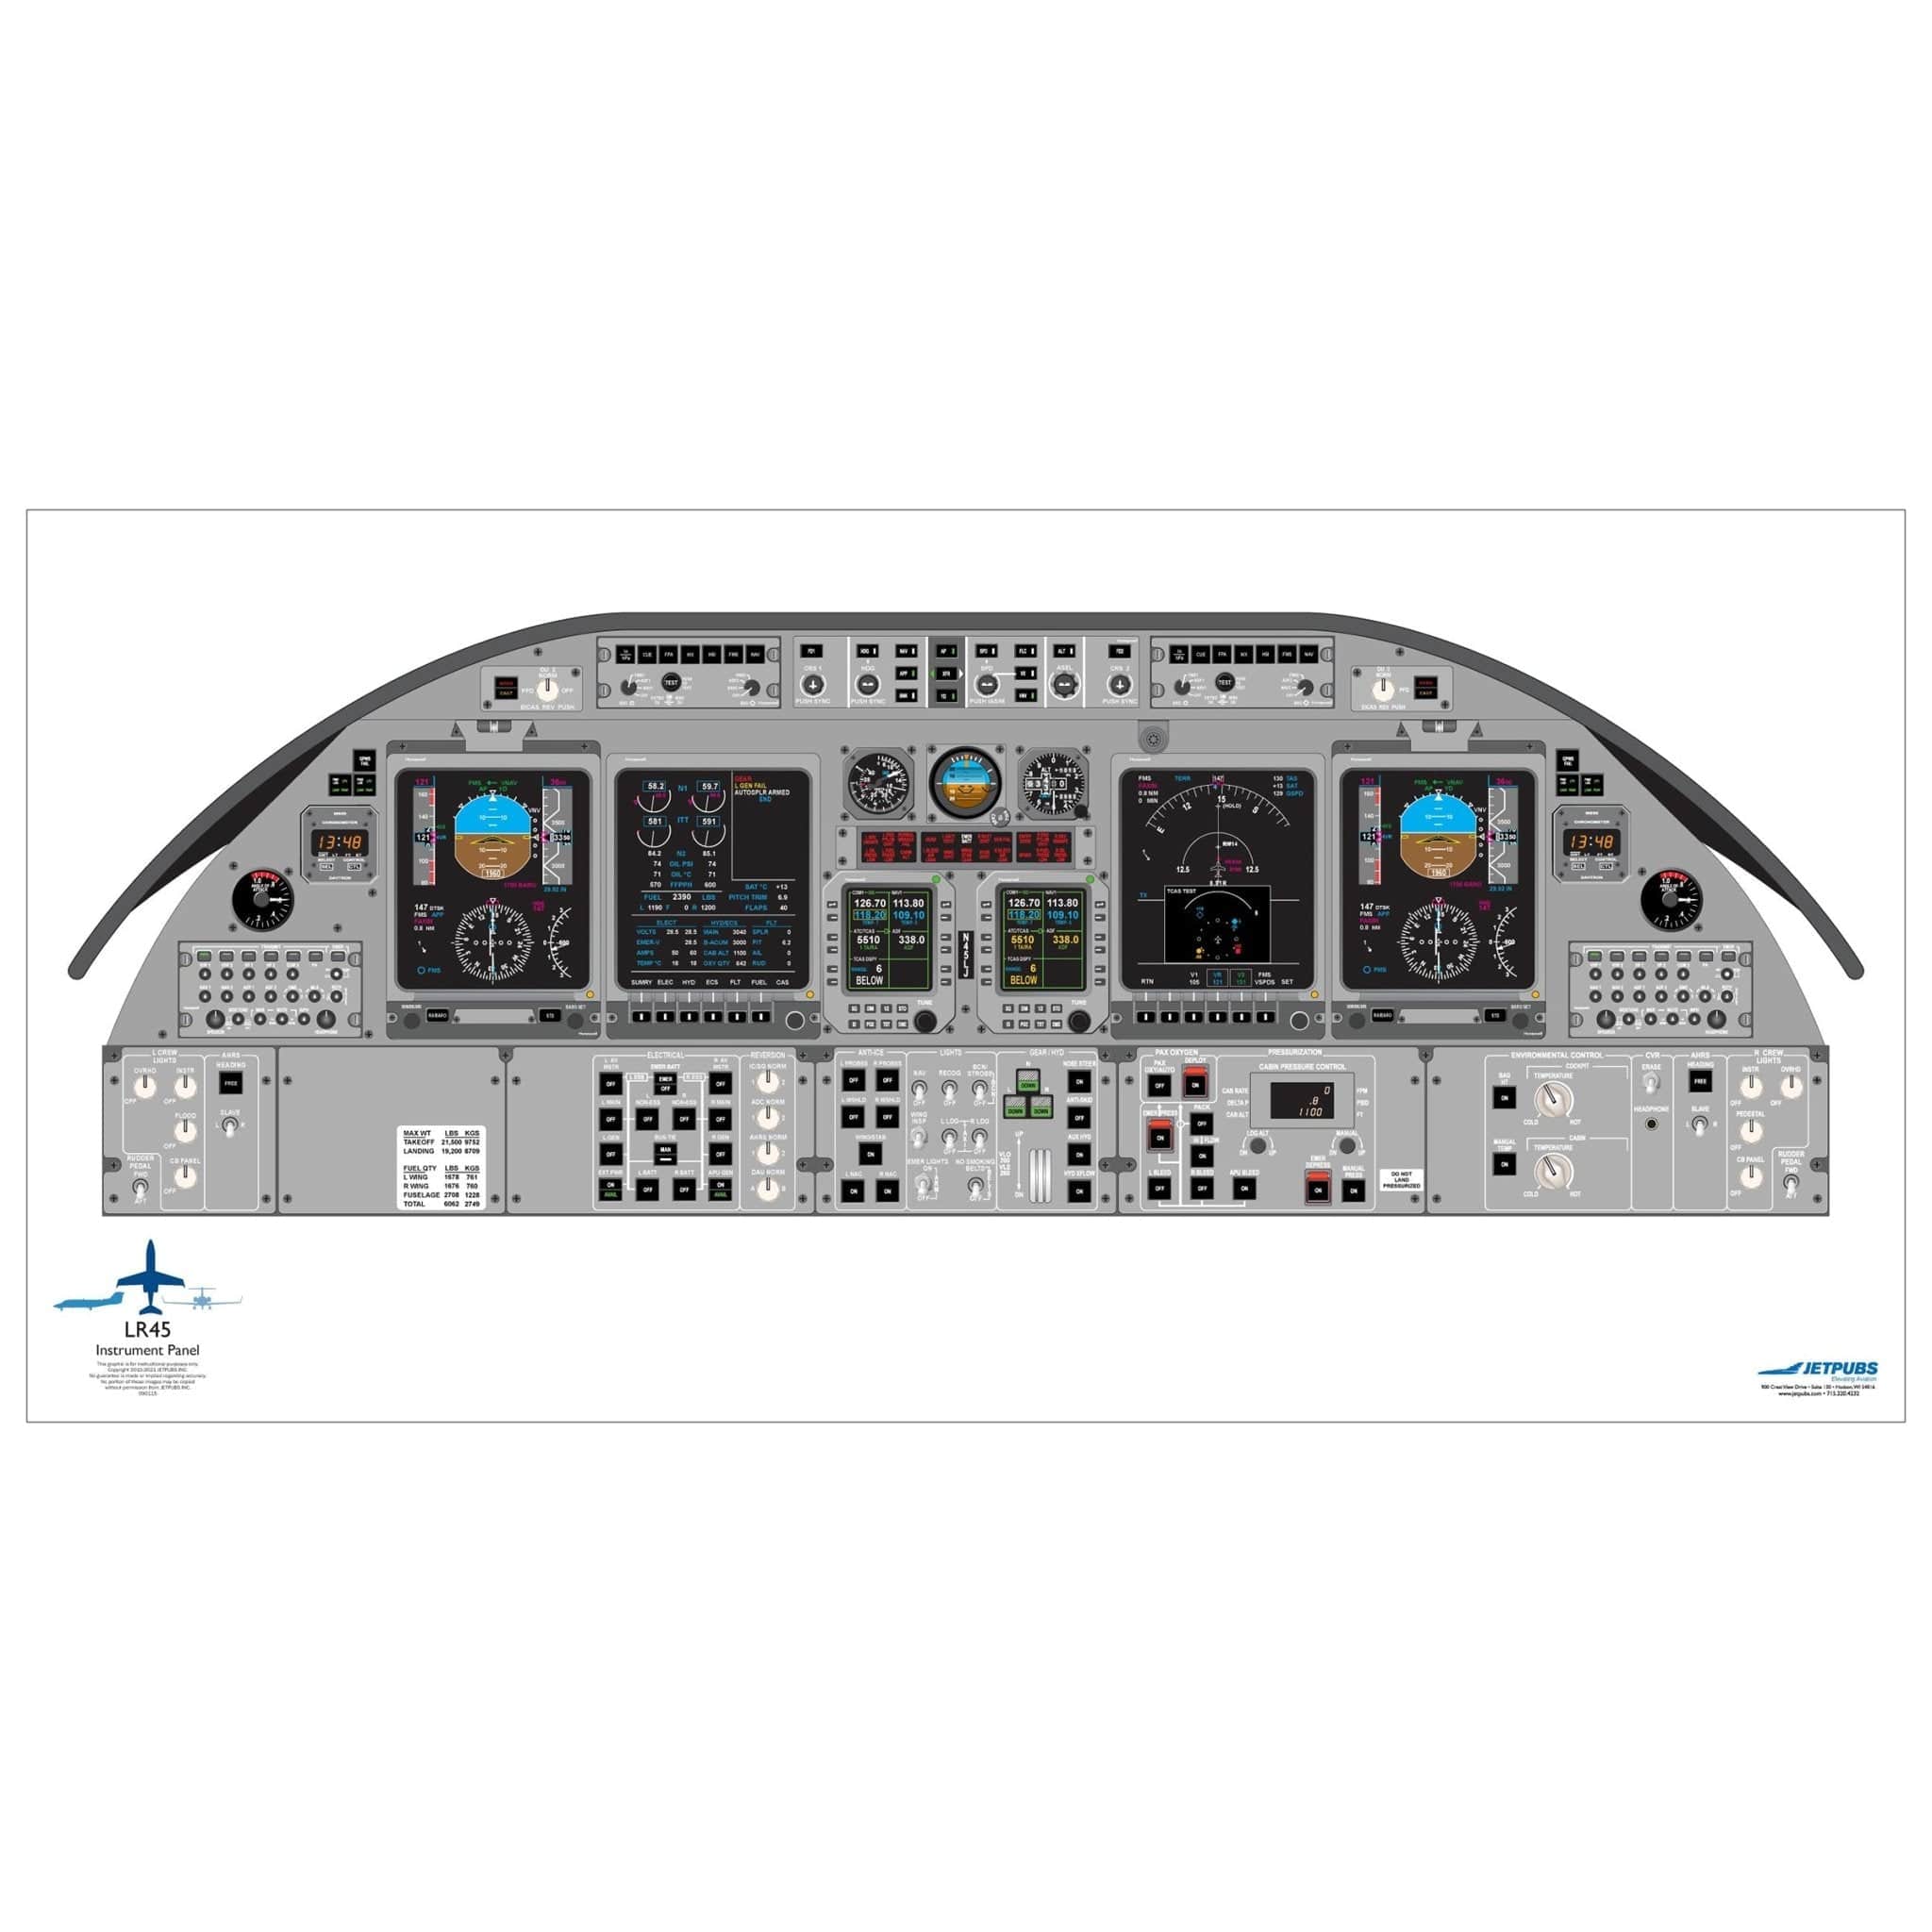 Learjet 18" x 36" Cockpit Posters